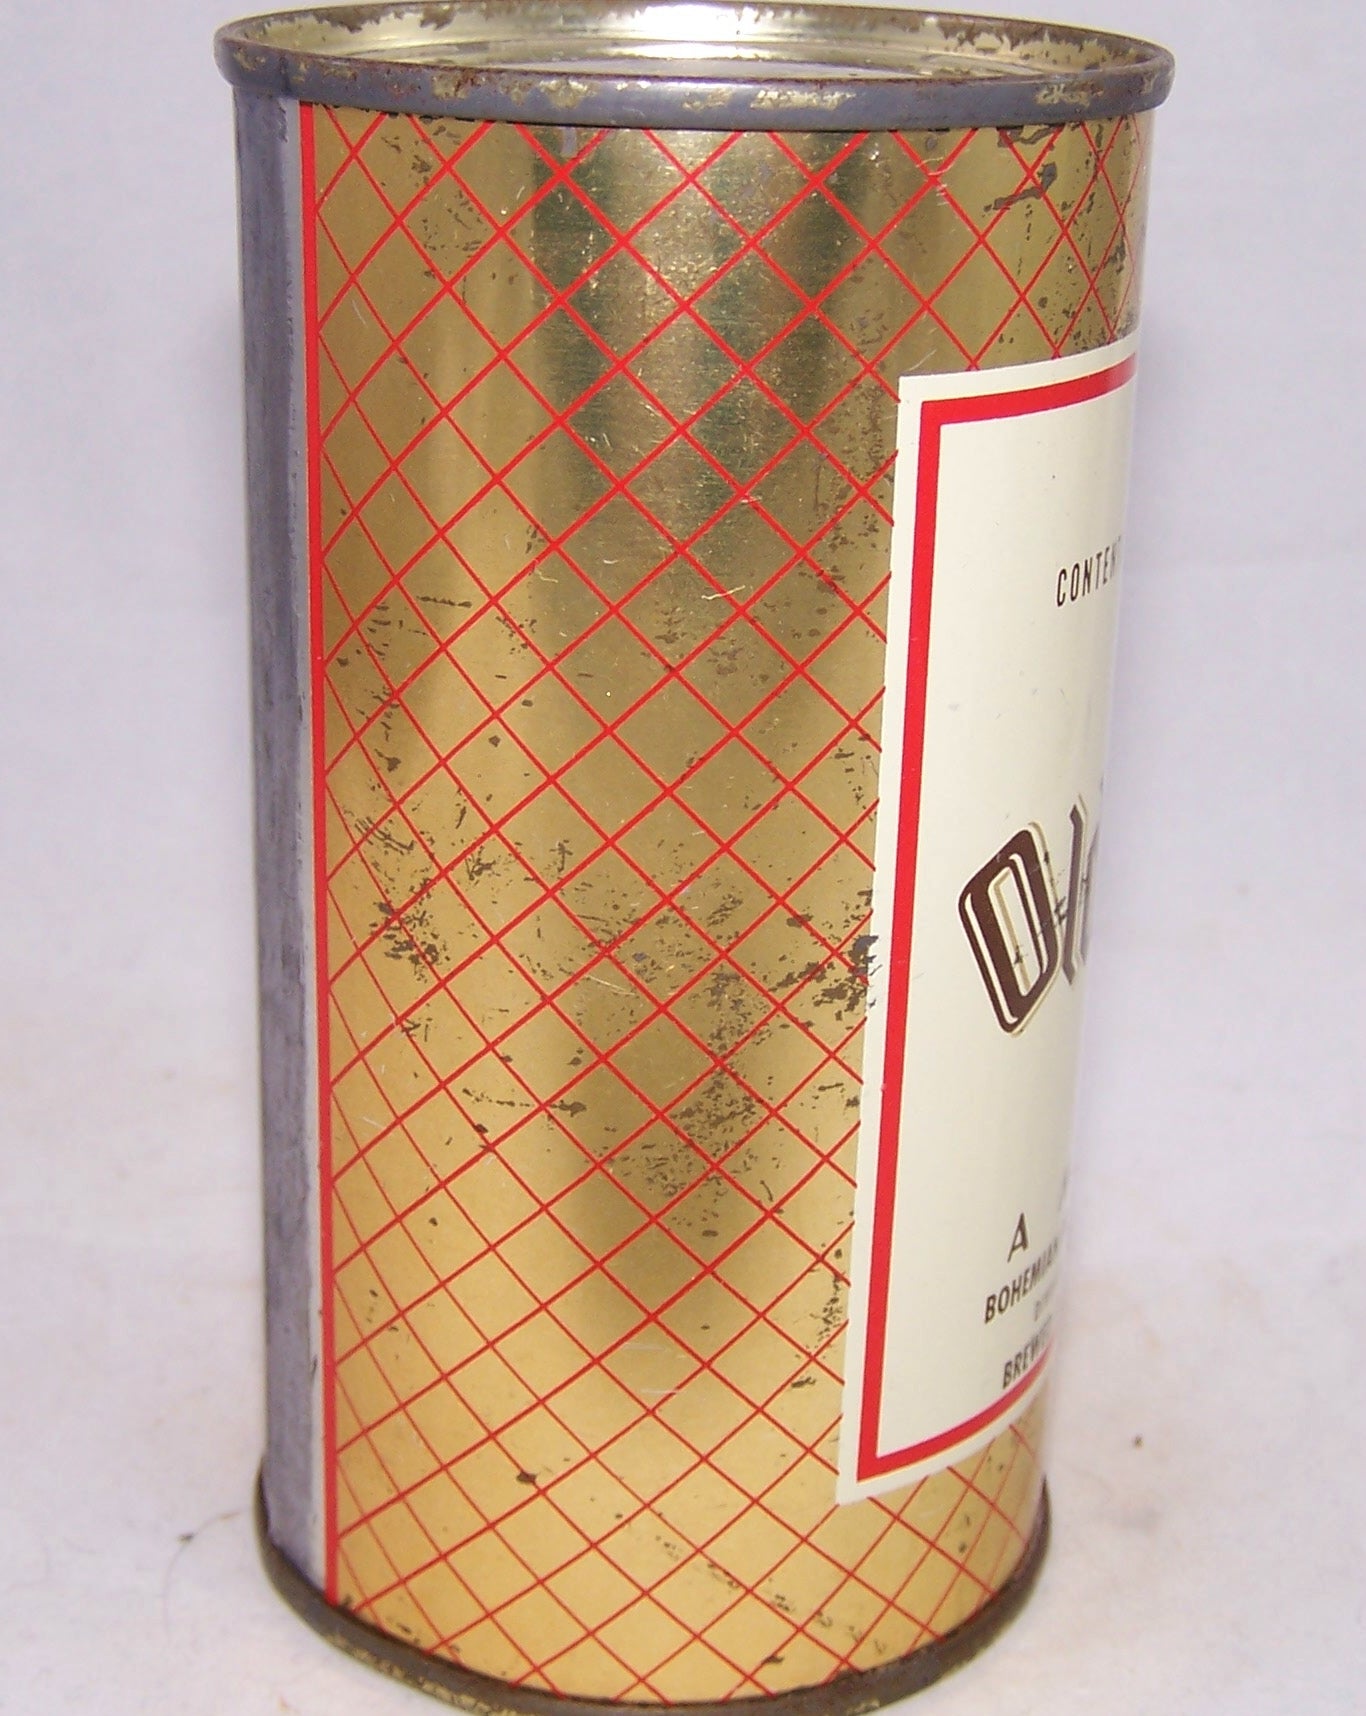 Olde English "600" Brand Malt Liquor, USBC 108-40, Grade 1- Sold on 04/06/18